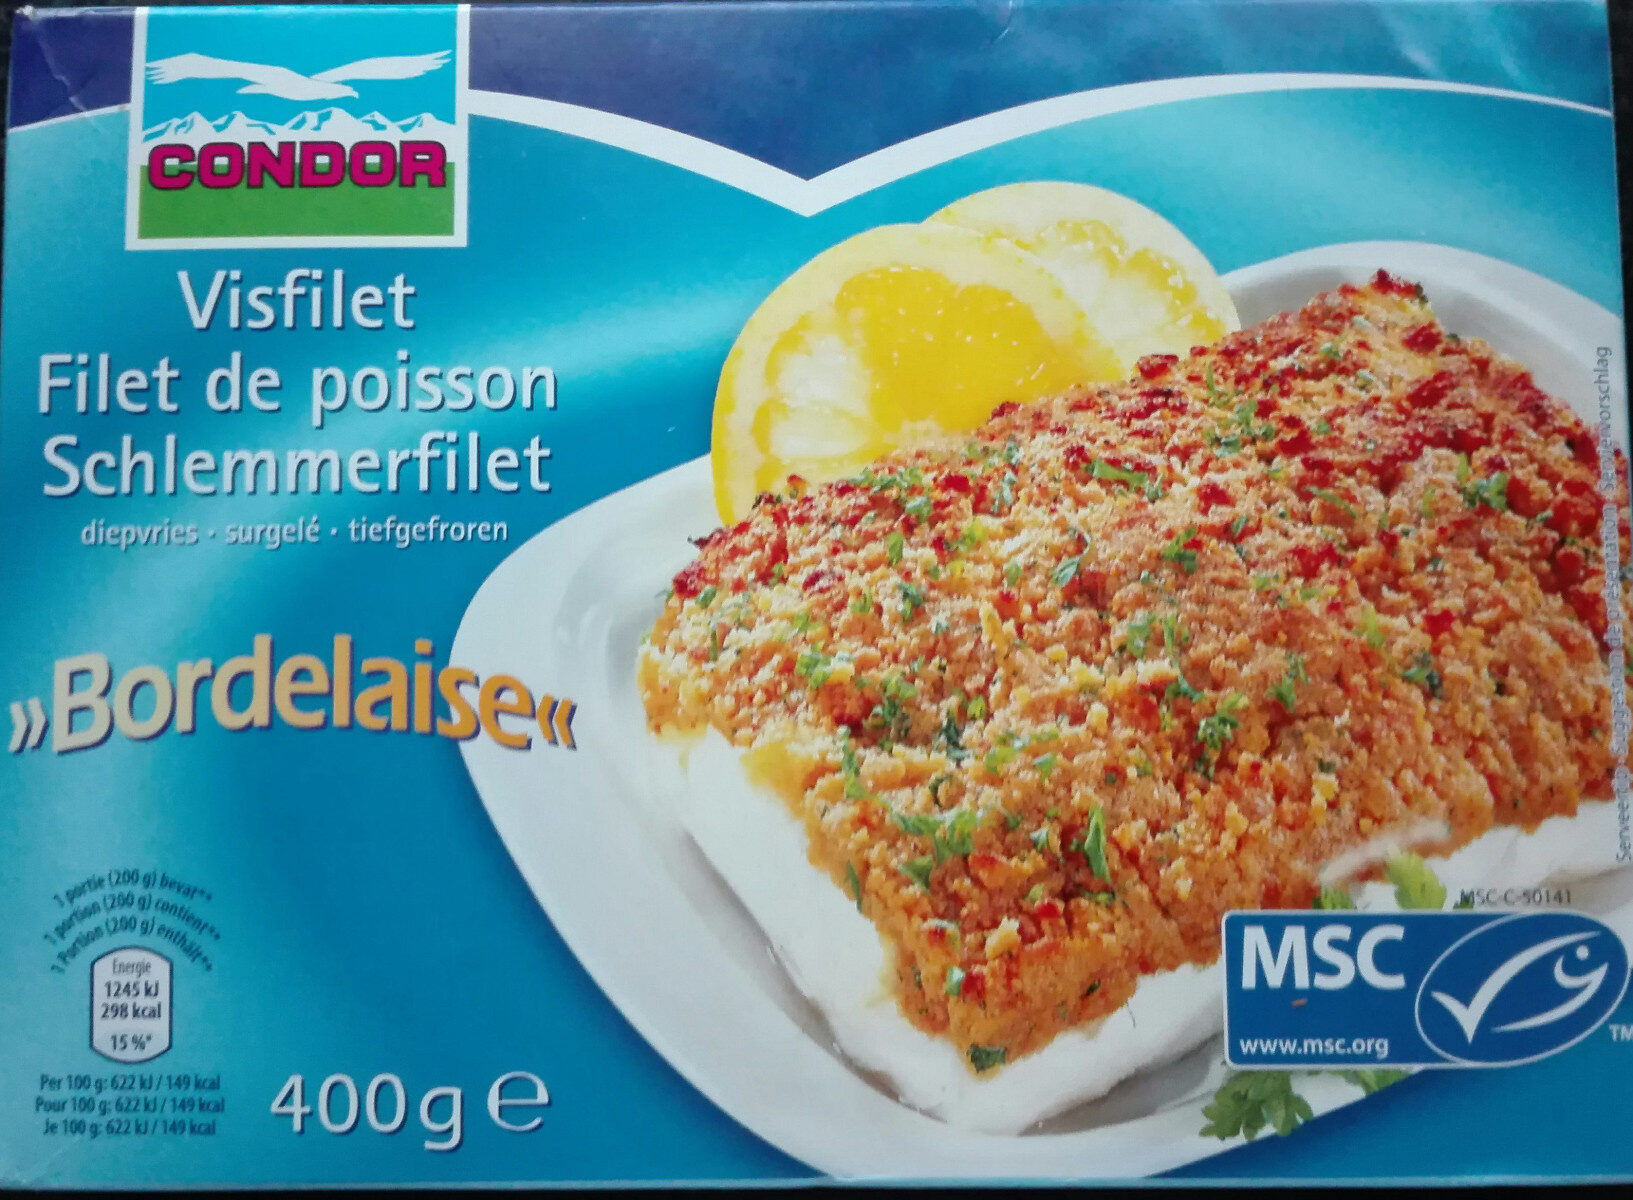 Filet de poisson "Bordelaise" - Product - nl